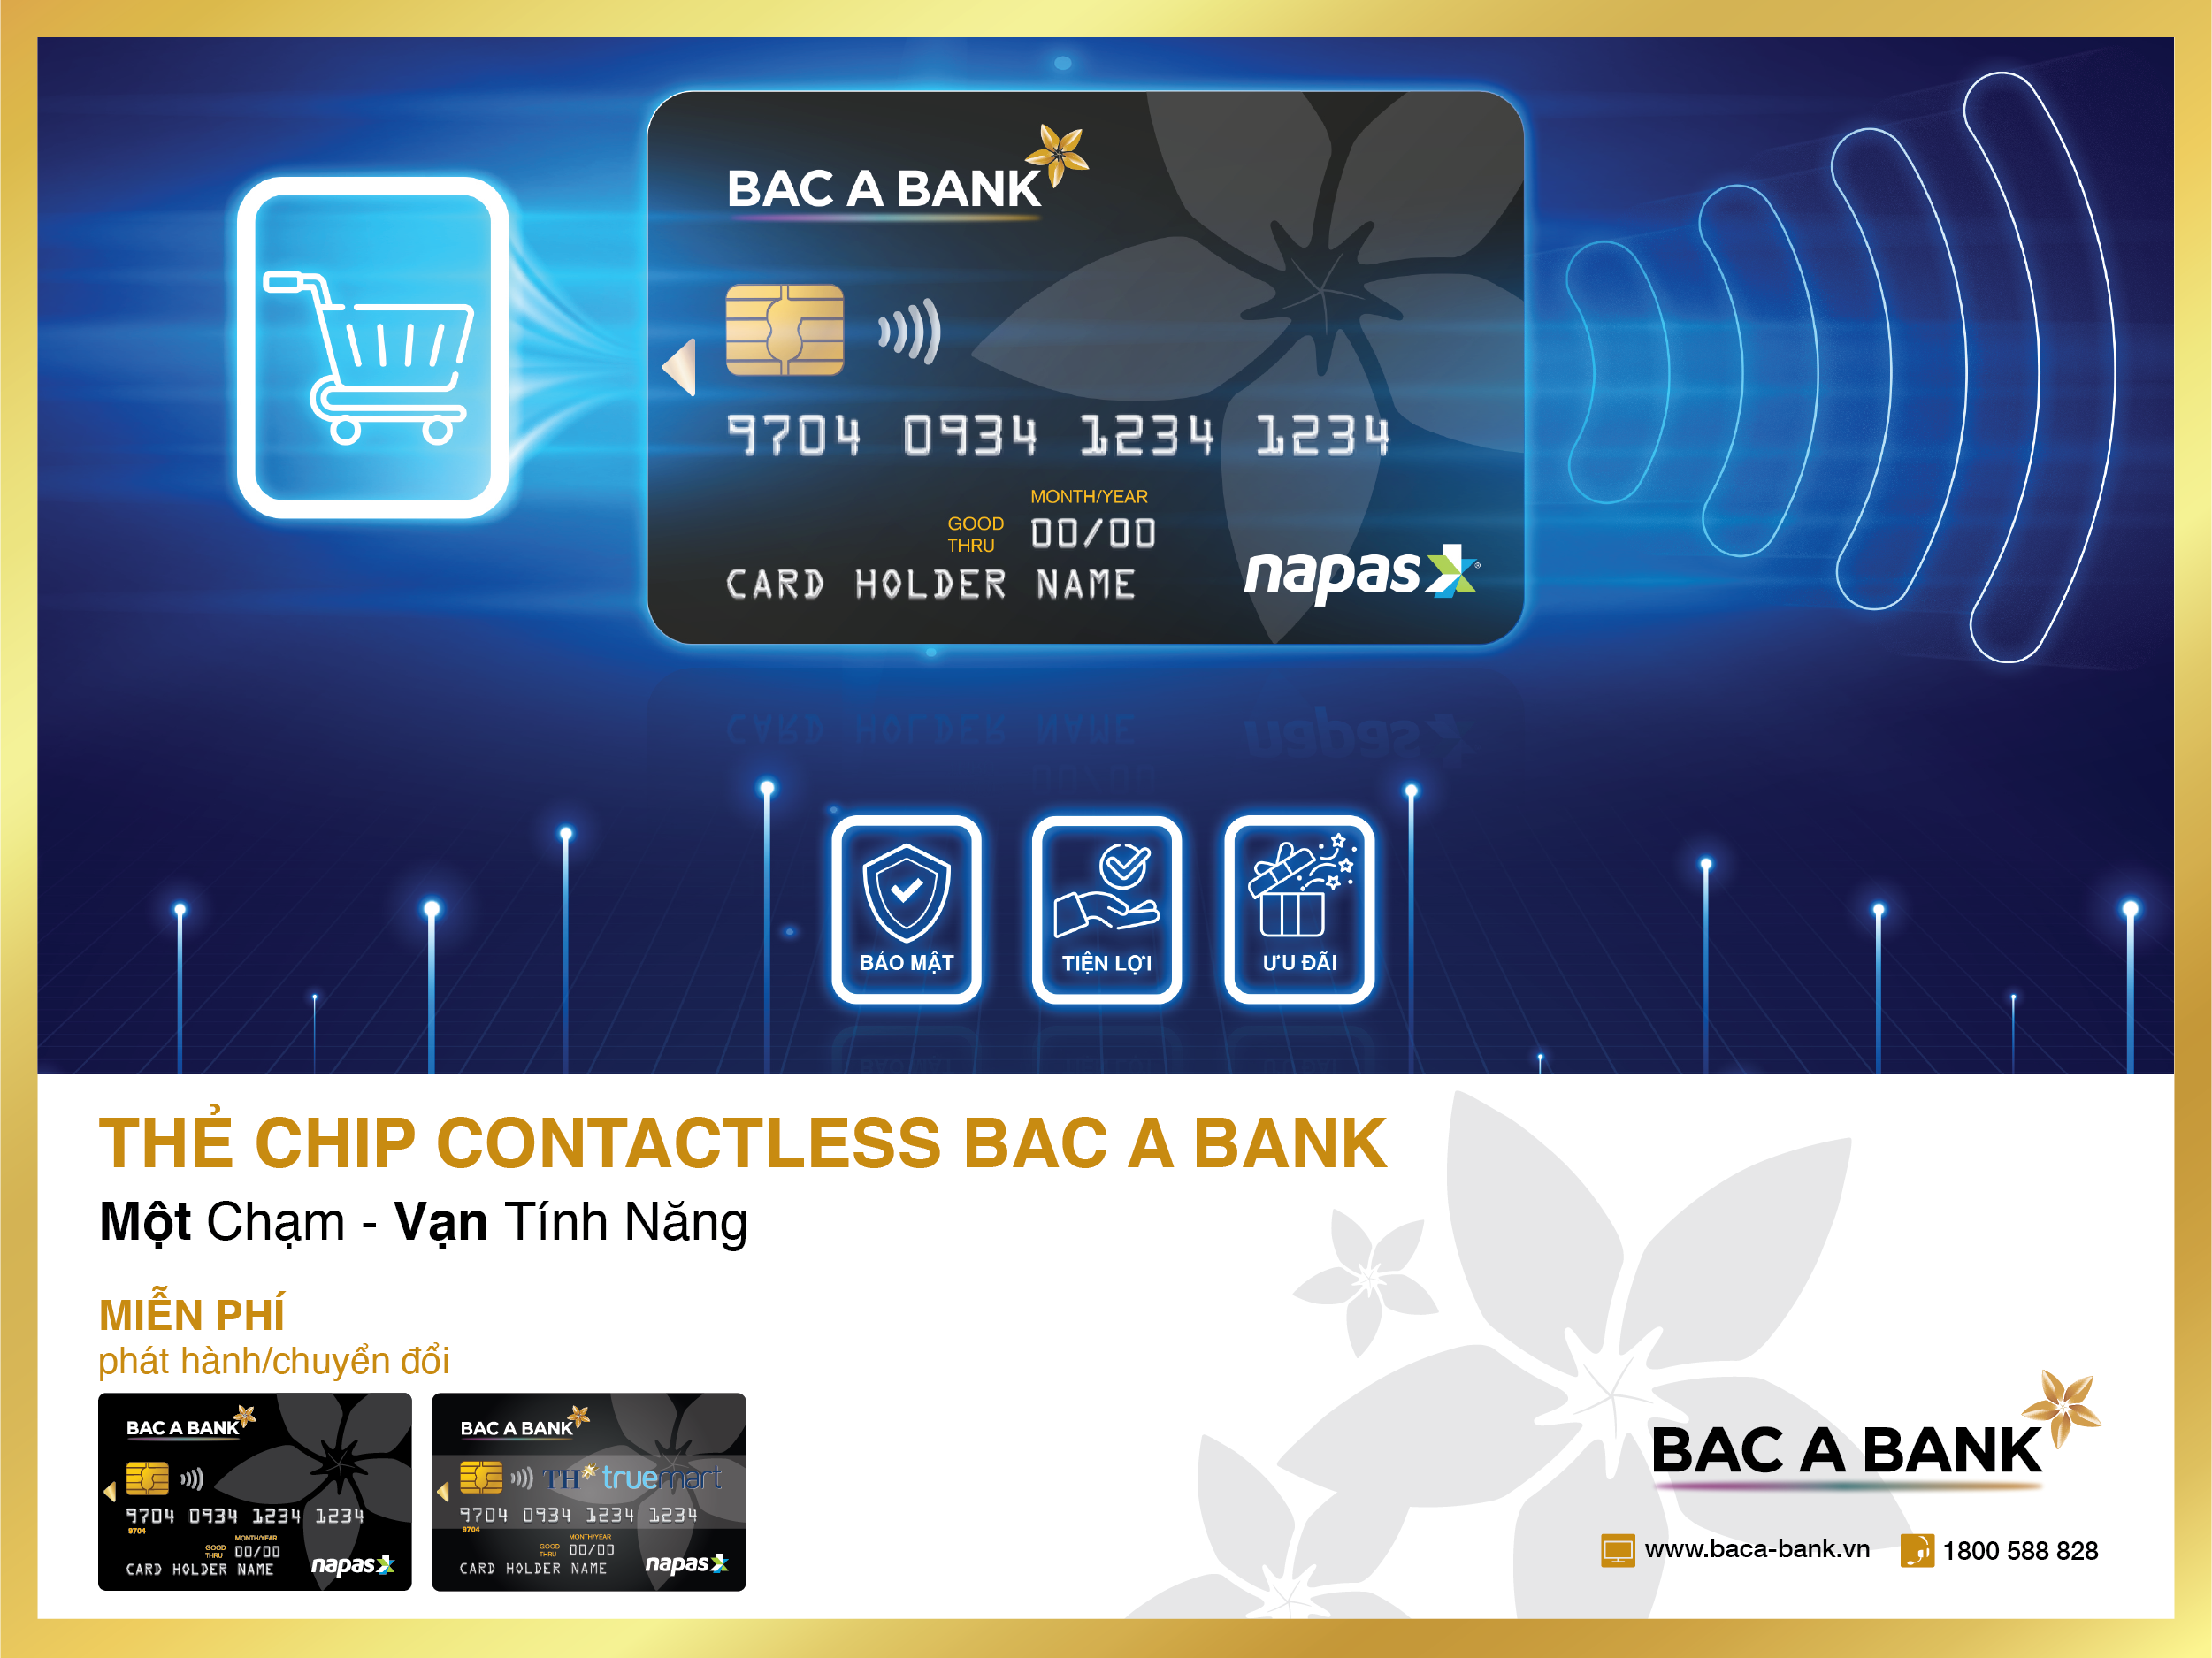 bac-a-bank-ra-mat-the-chip-contactless-1-1638857673.png